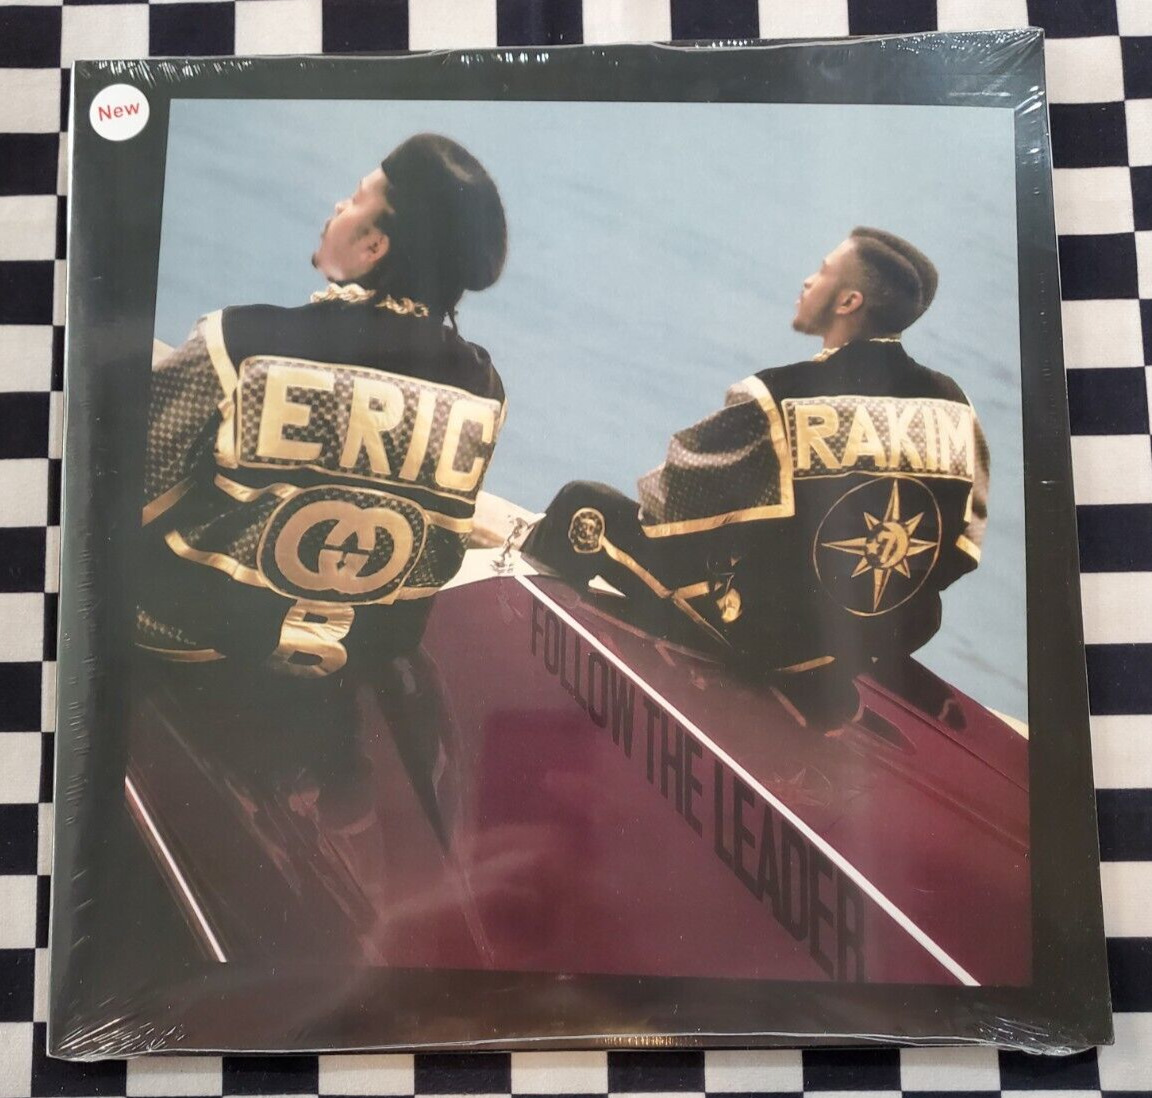 Follow The Leader 2xLP by Eric B. & Rakim vinyl 2018 sealed new B0026369-01